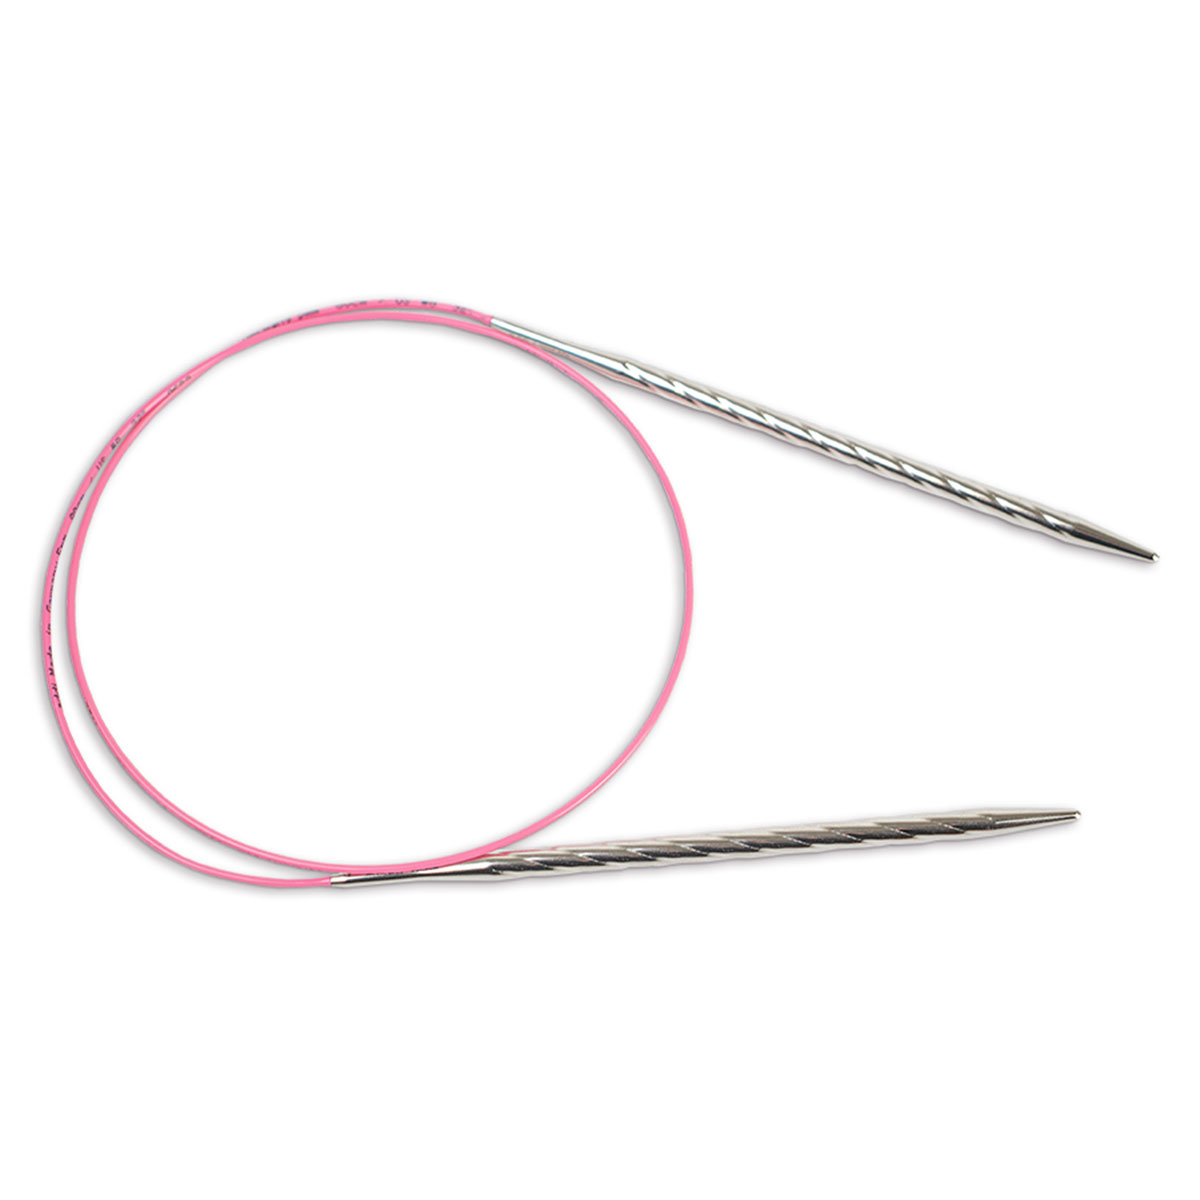 Prym Circular Knitting Needles 32 Size 7/4.5mm